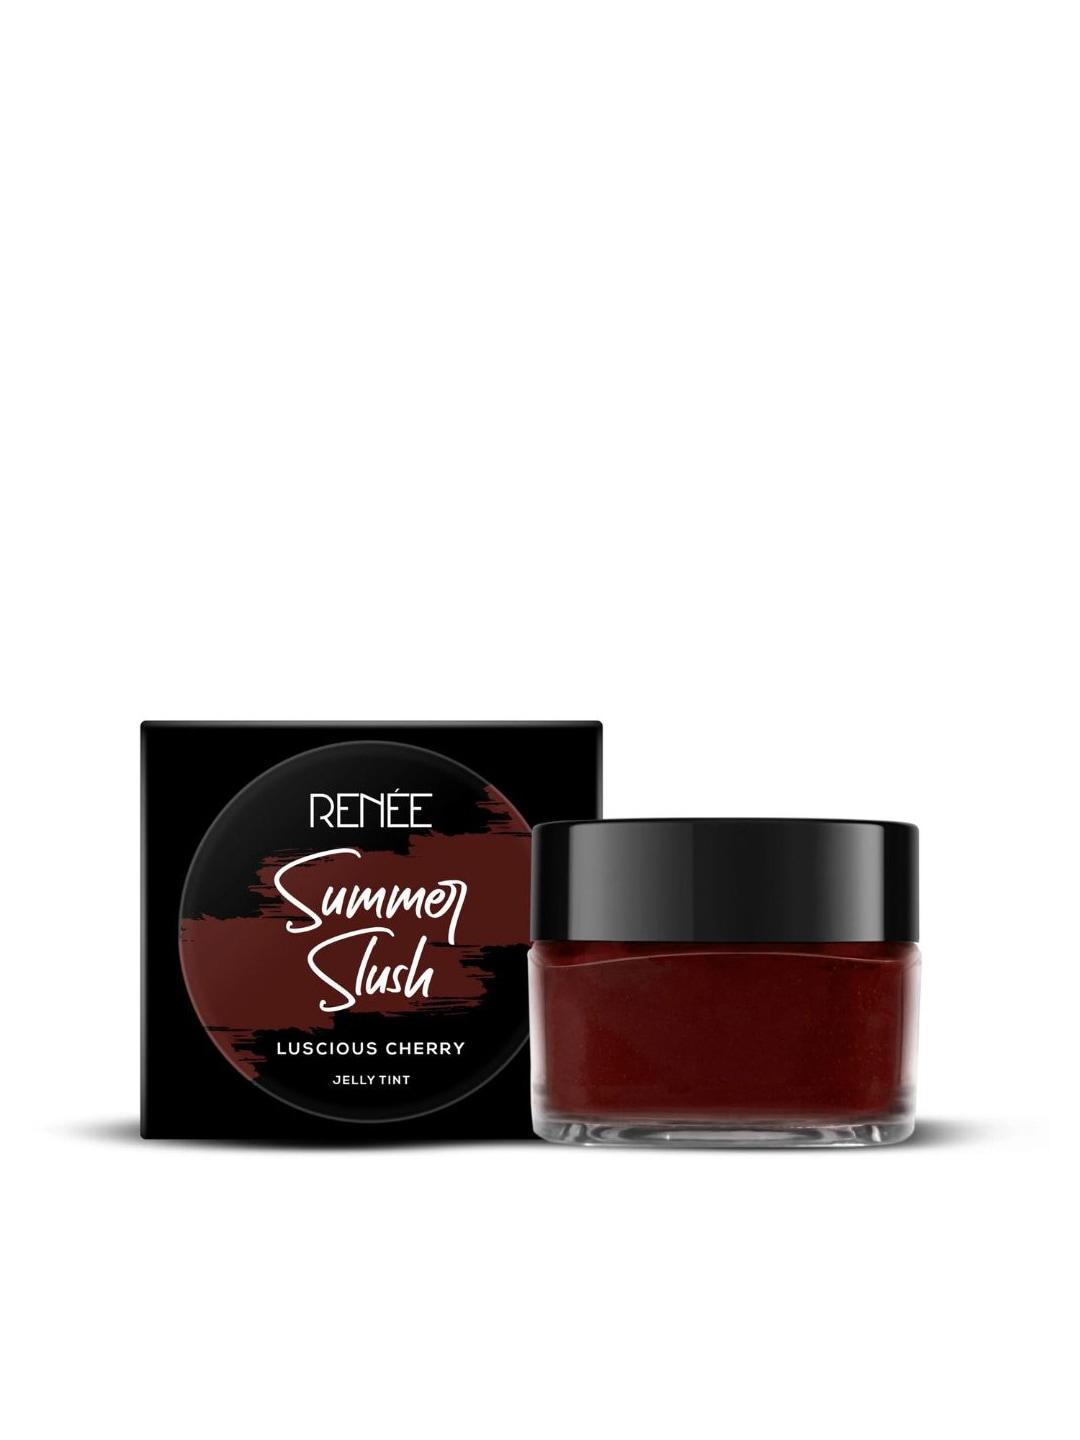 renee summer slush jelly tint - luscious cherry 13g